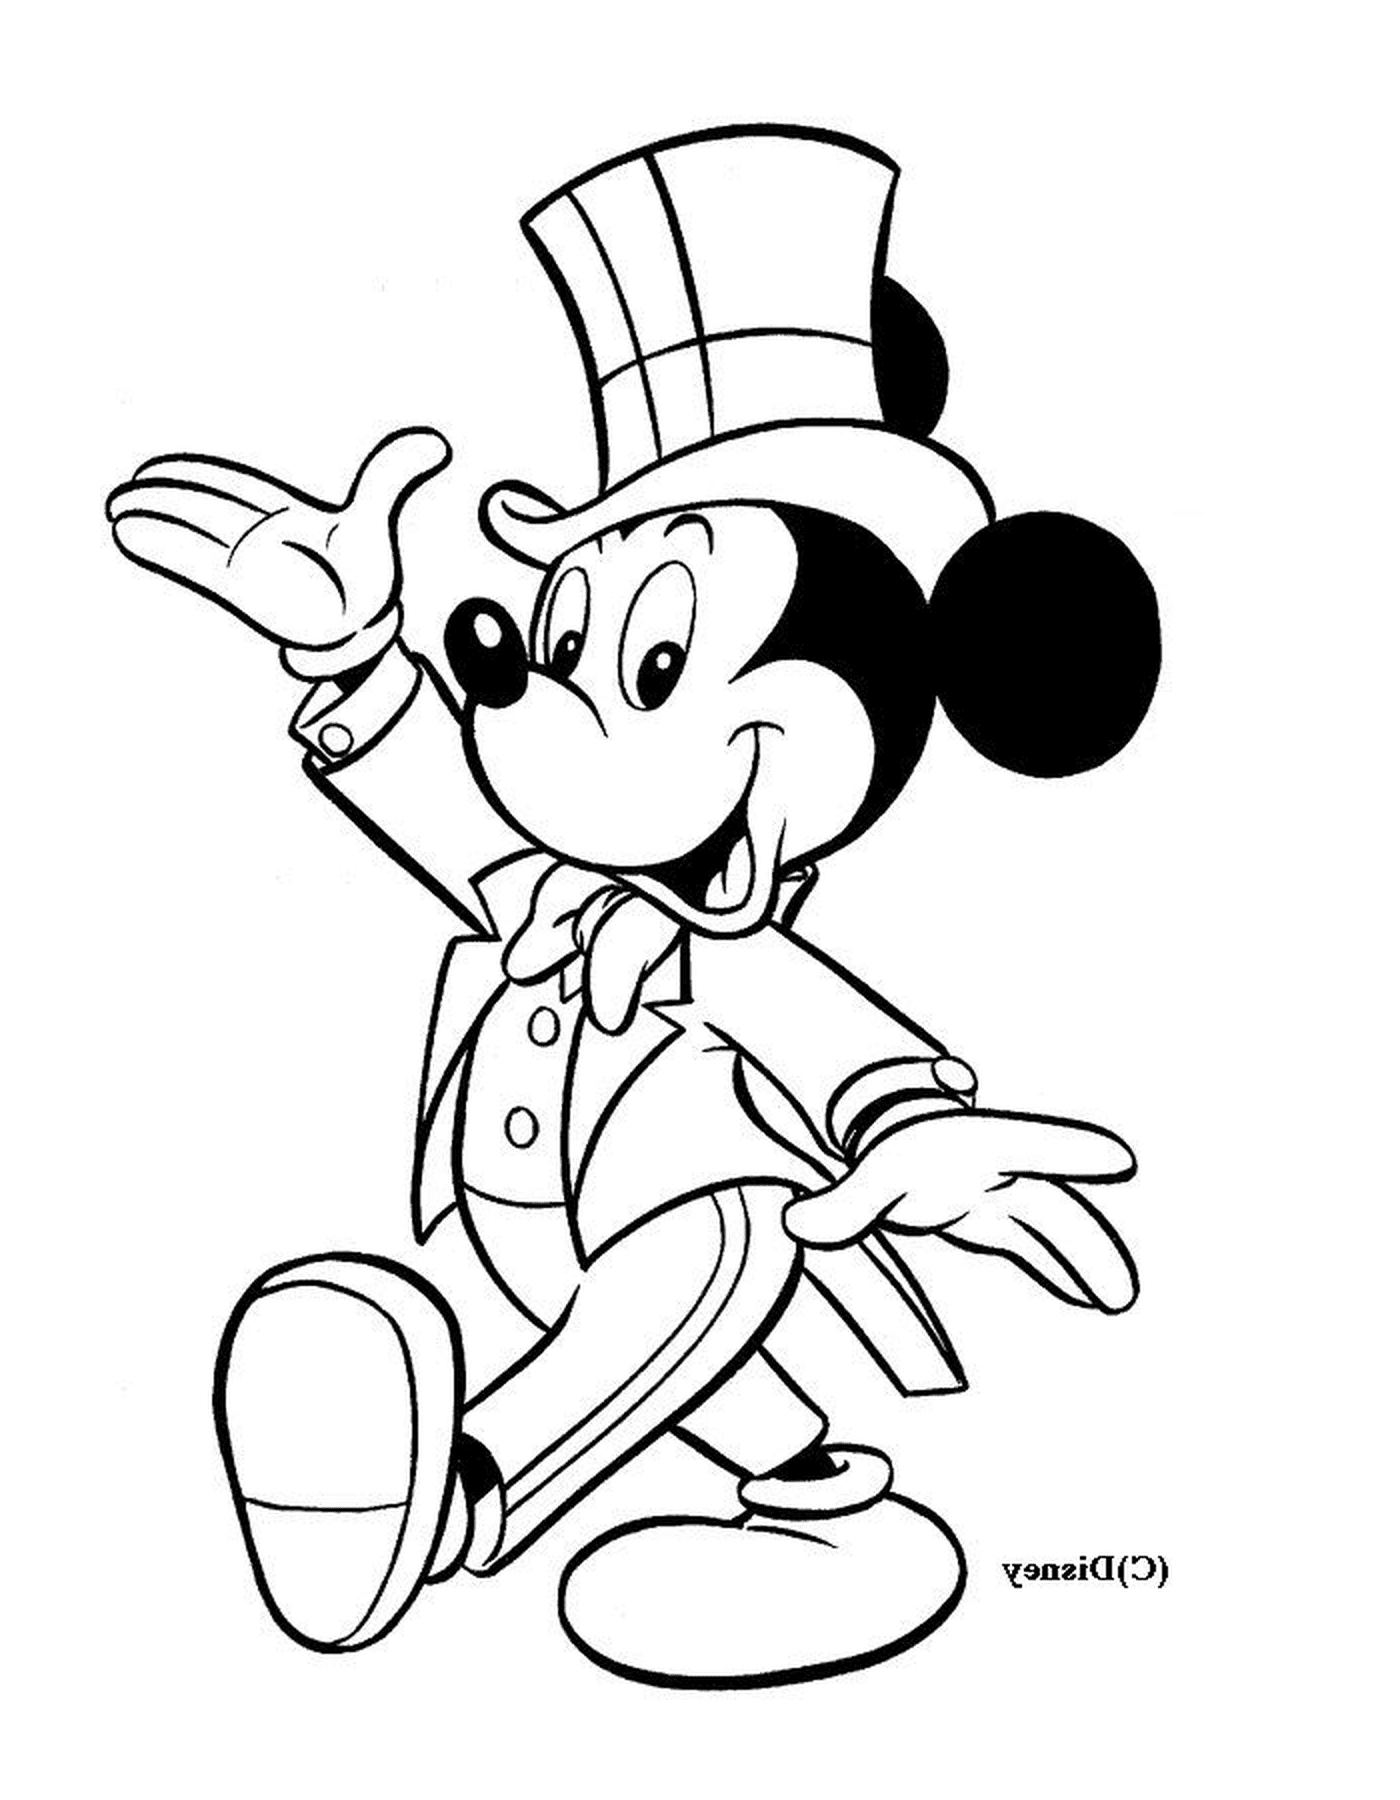  Mickey in tuxedo 